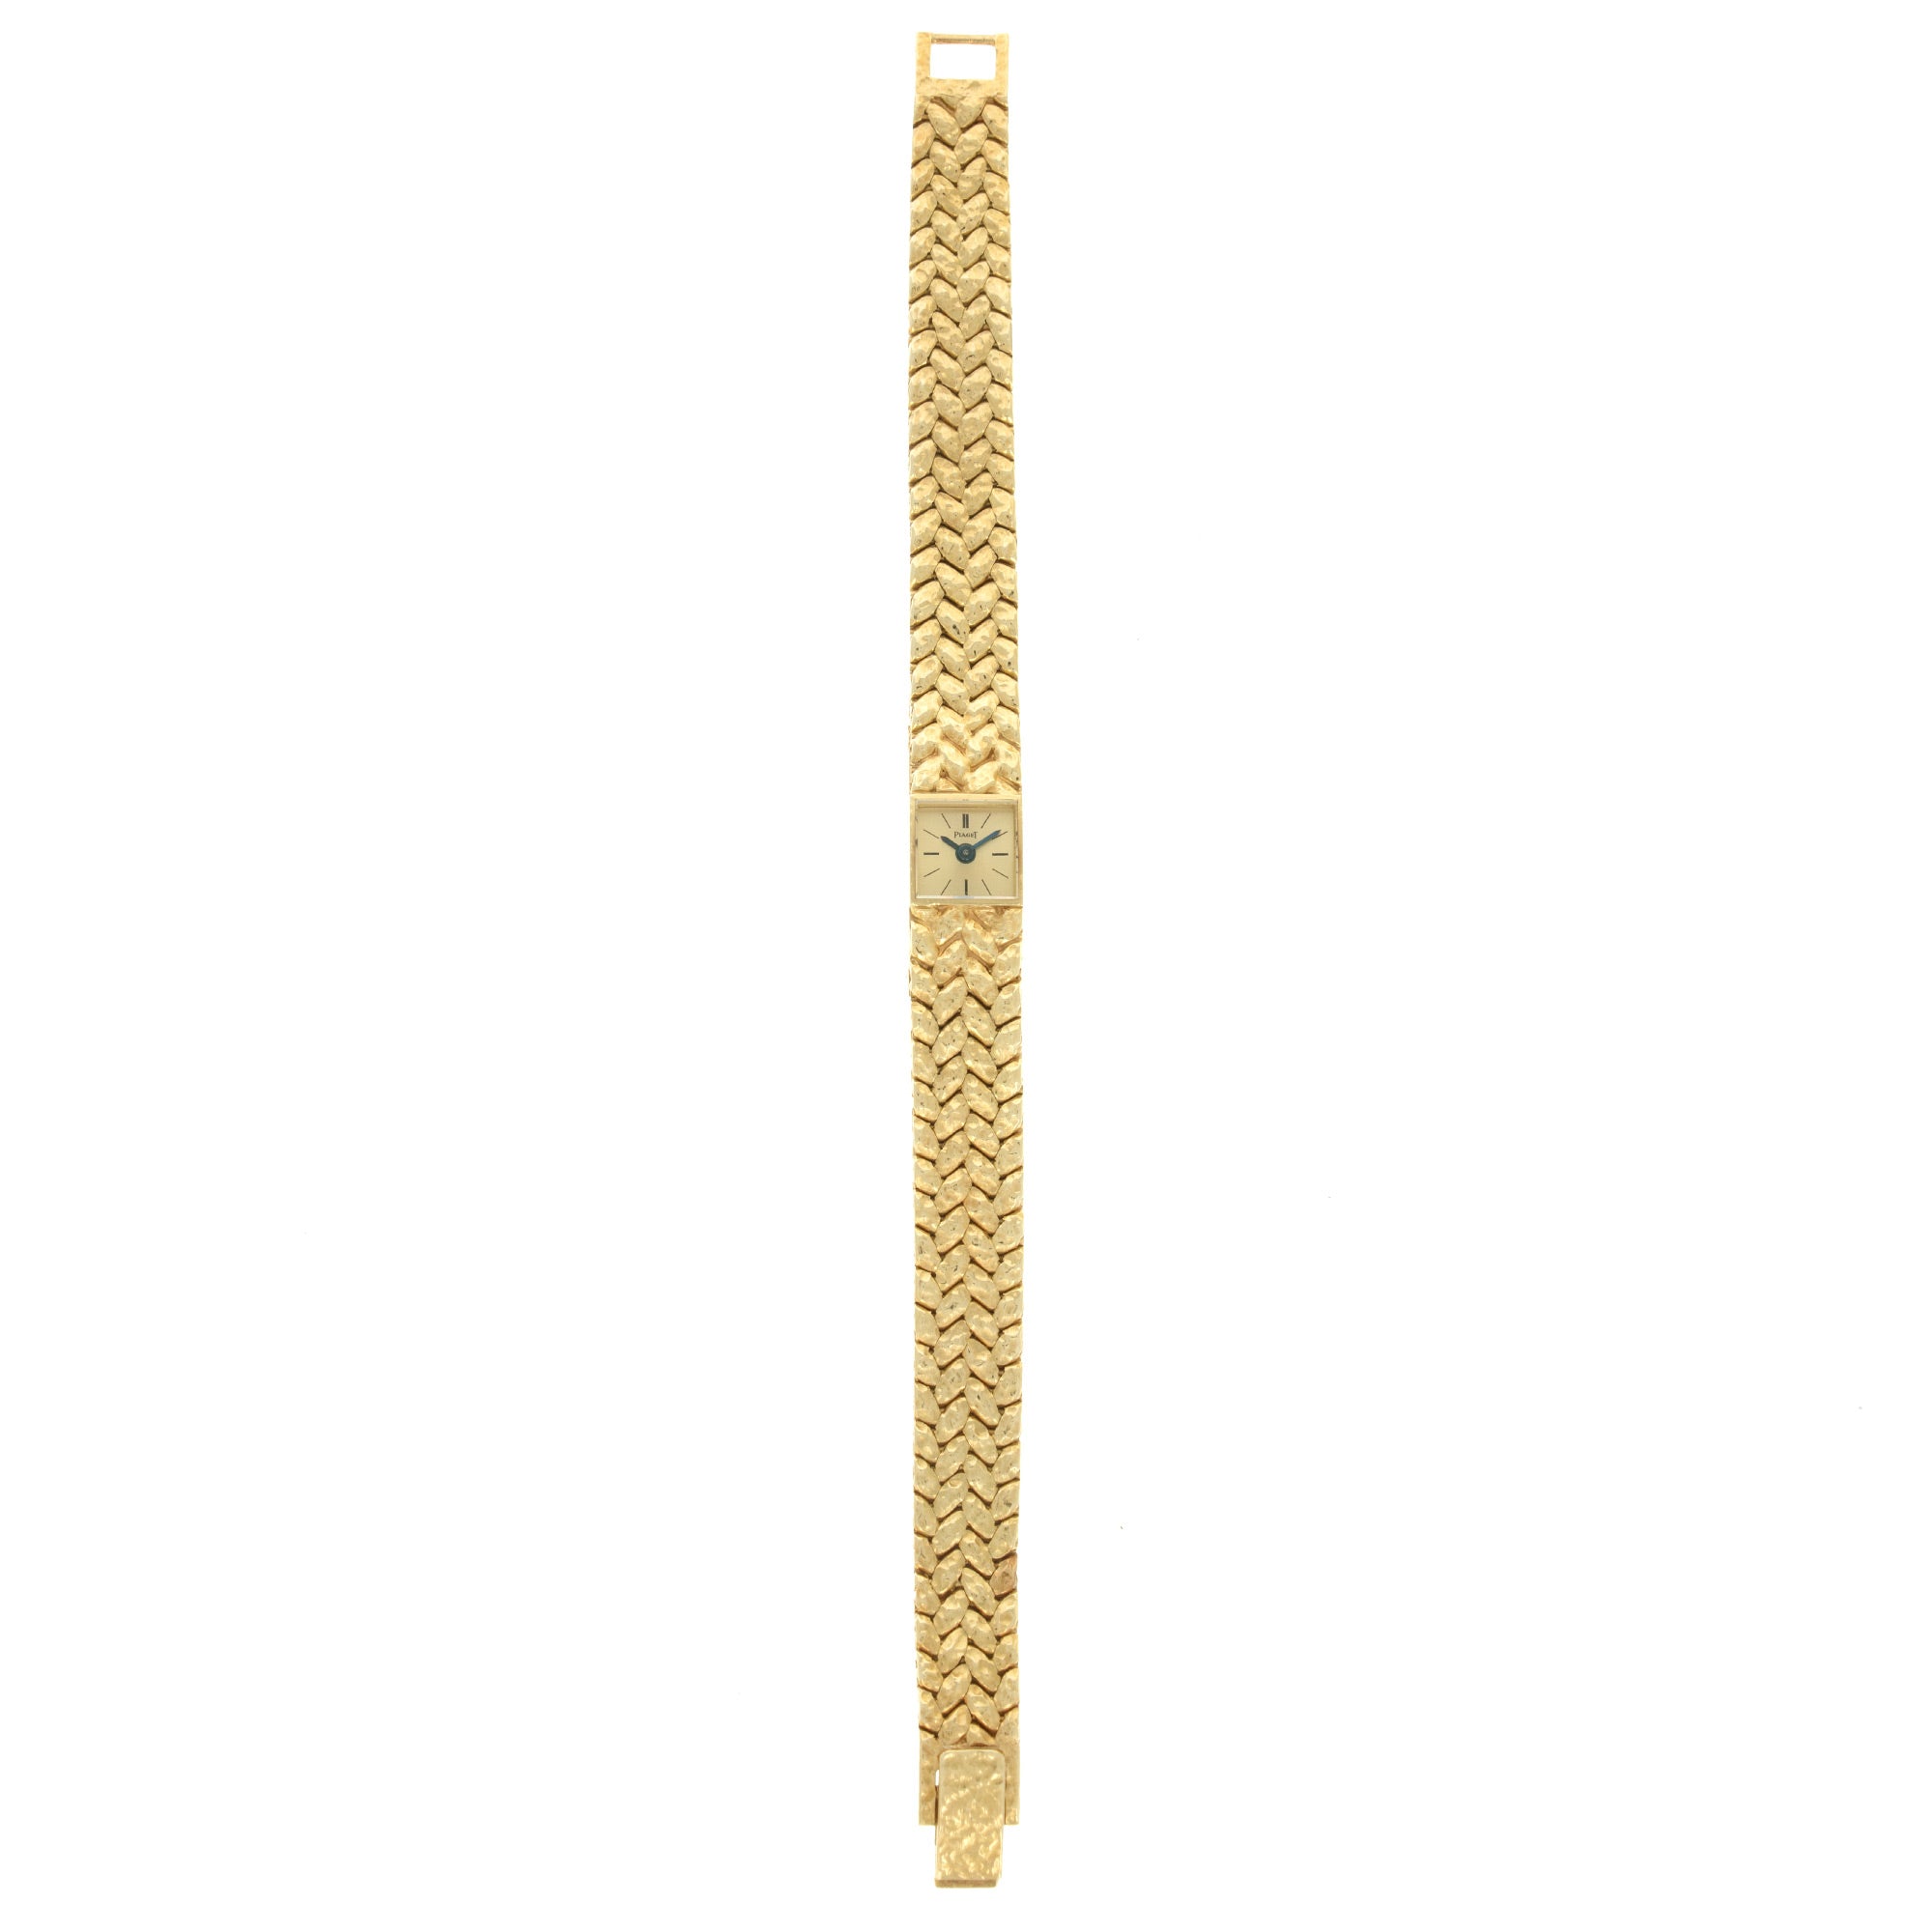 Piaget - Piaget Yellow Gold Ultra-Thin Bracelet Watch - The Keystone Watches